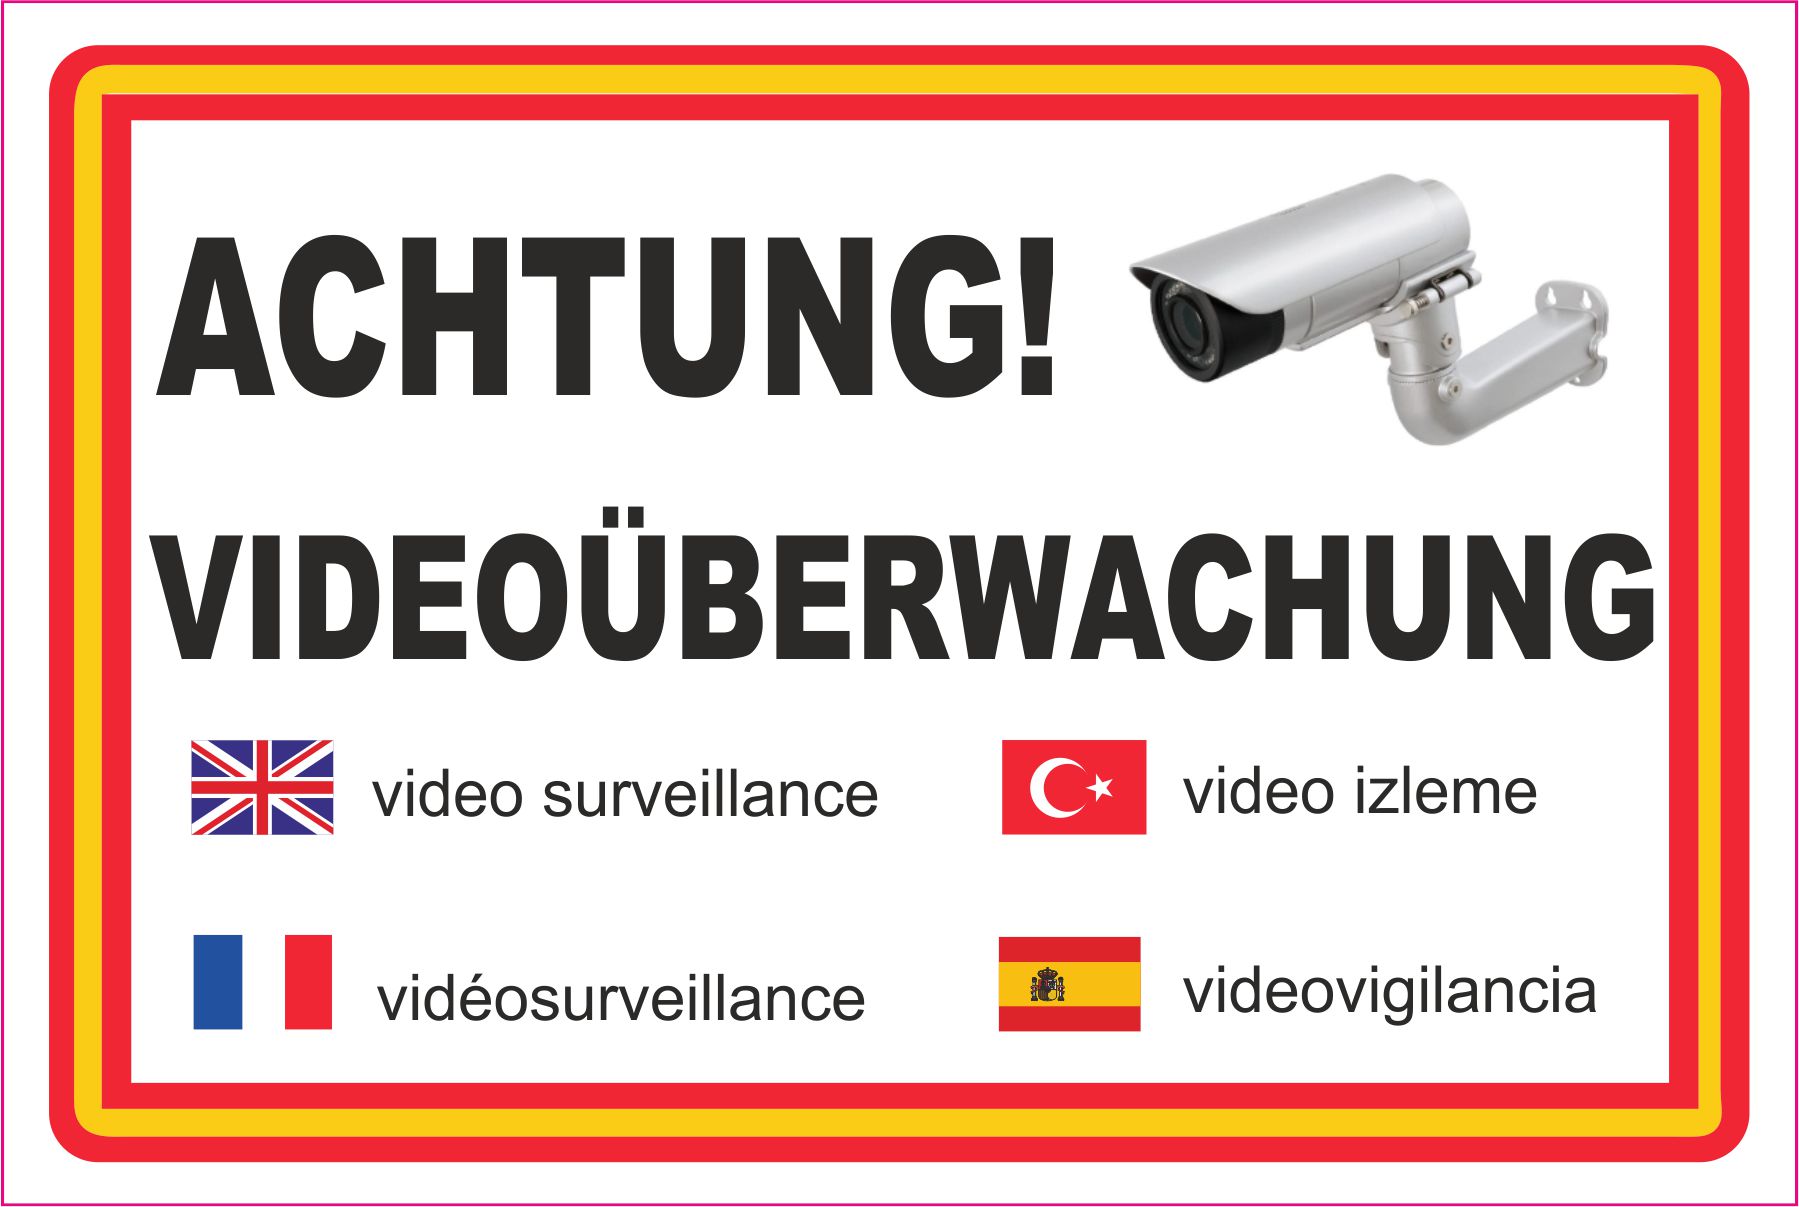 https://www.fahnen-staeb.de/onlineshop/media/images/org/SchildVideoberwachung.jpg